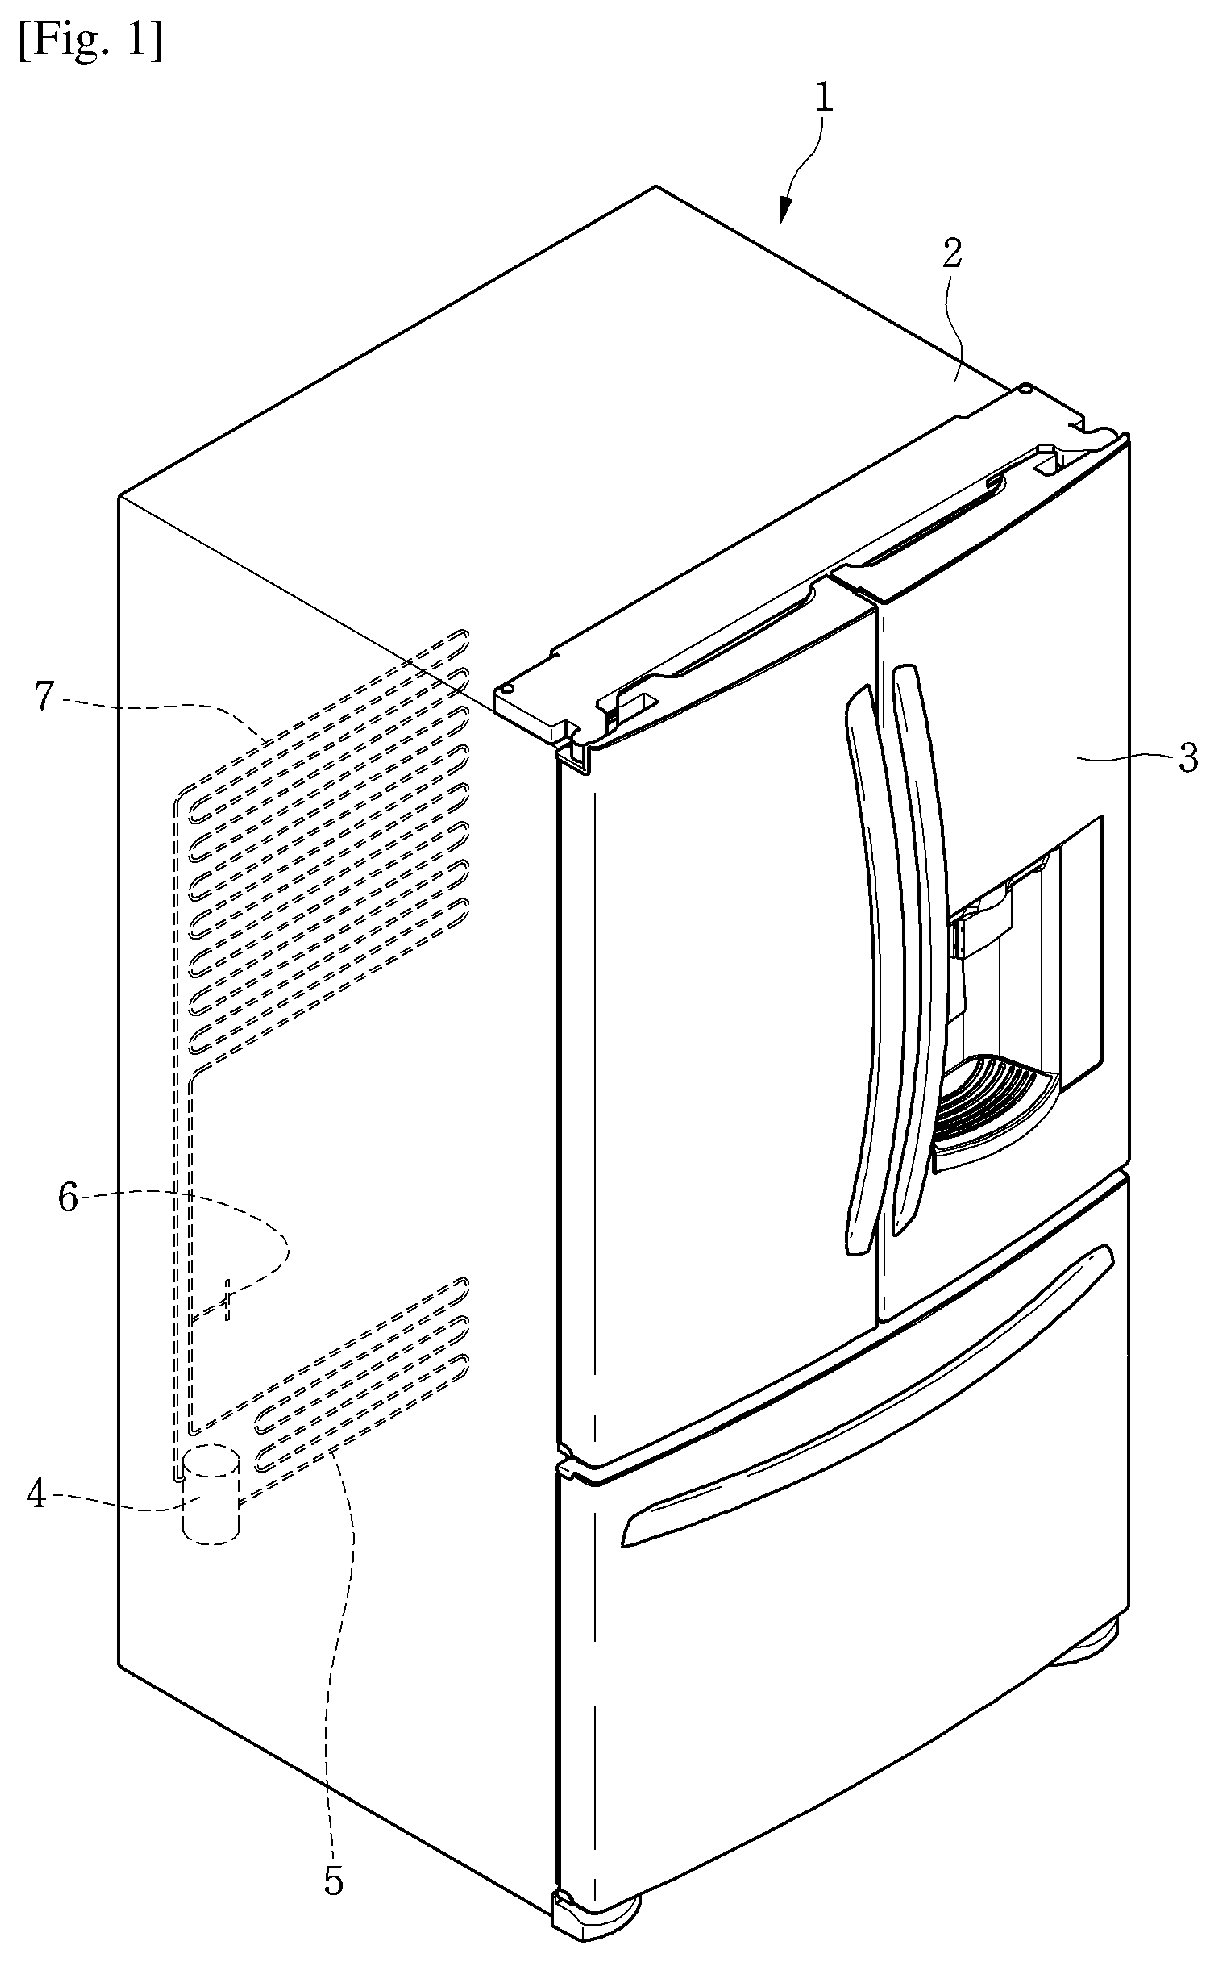 Vacuum adiabatic body and refrigerator